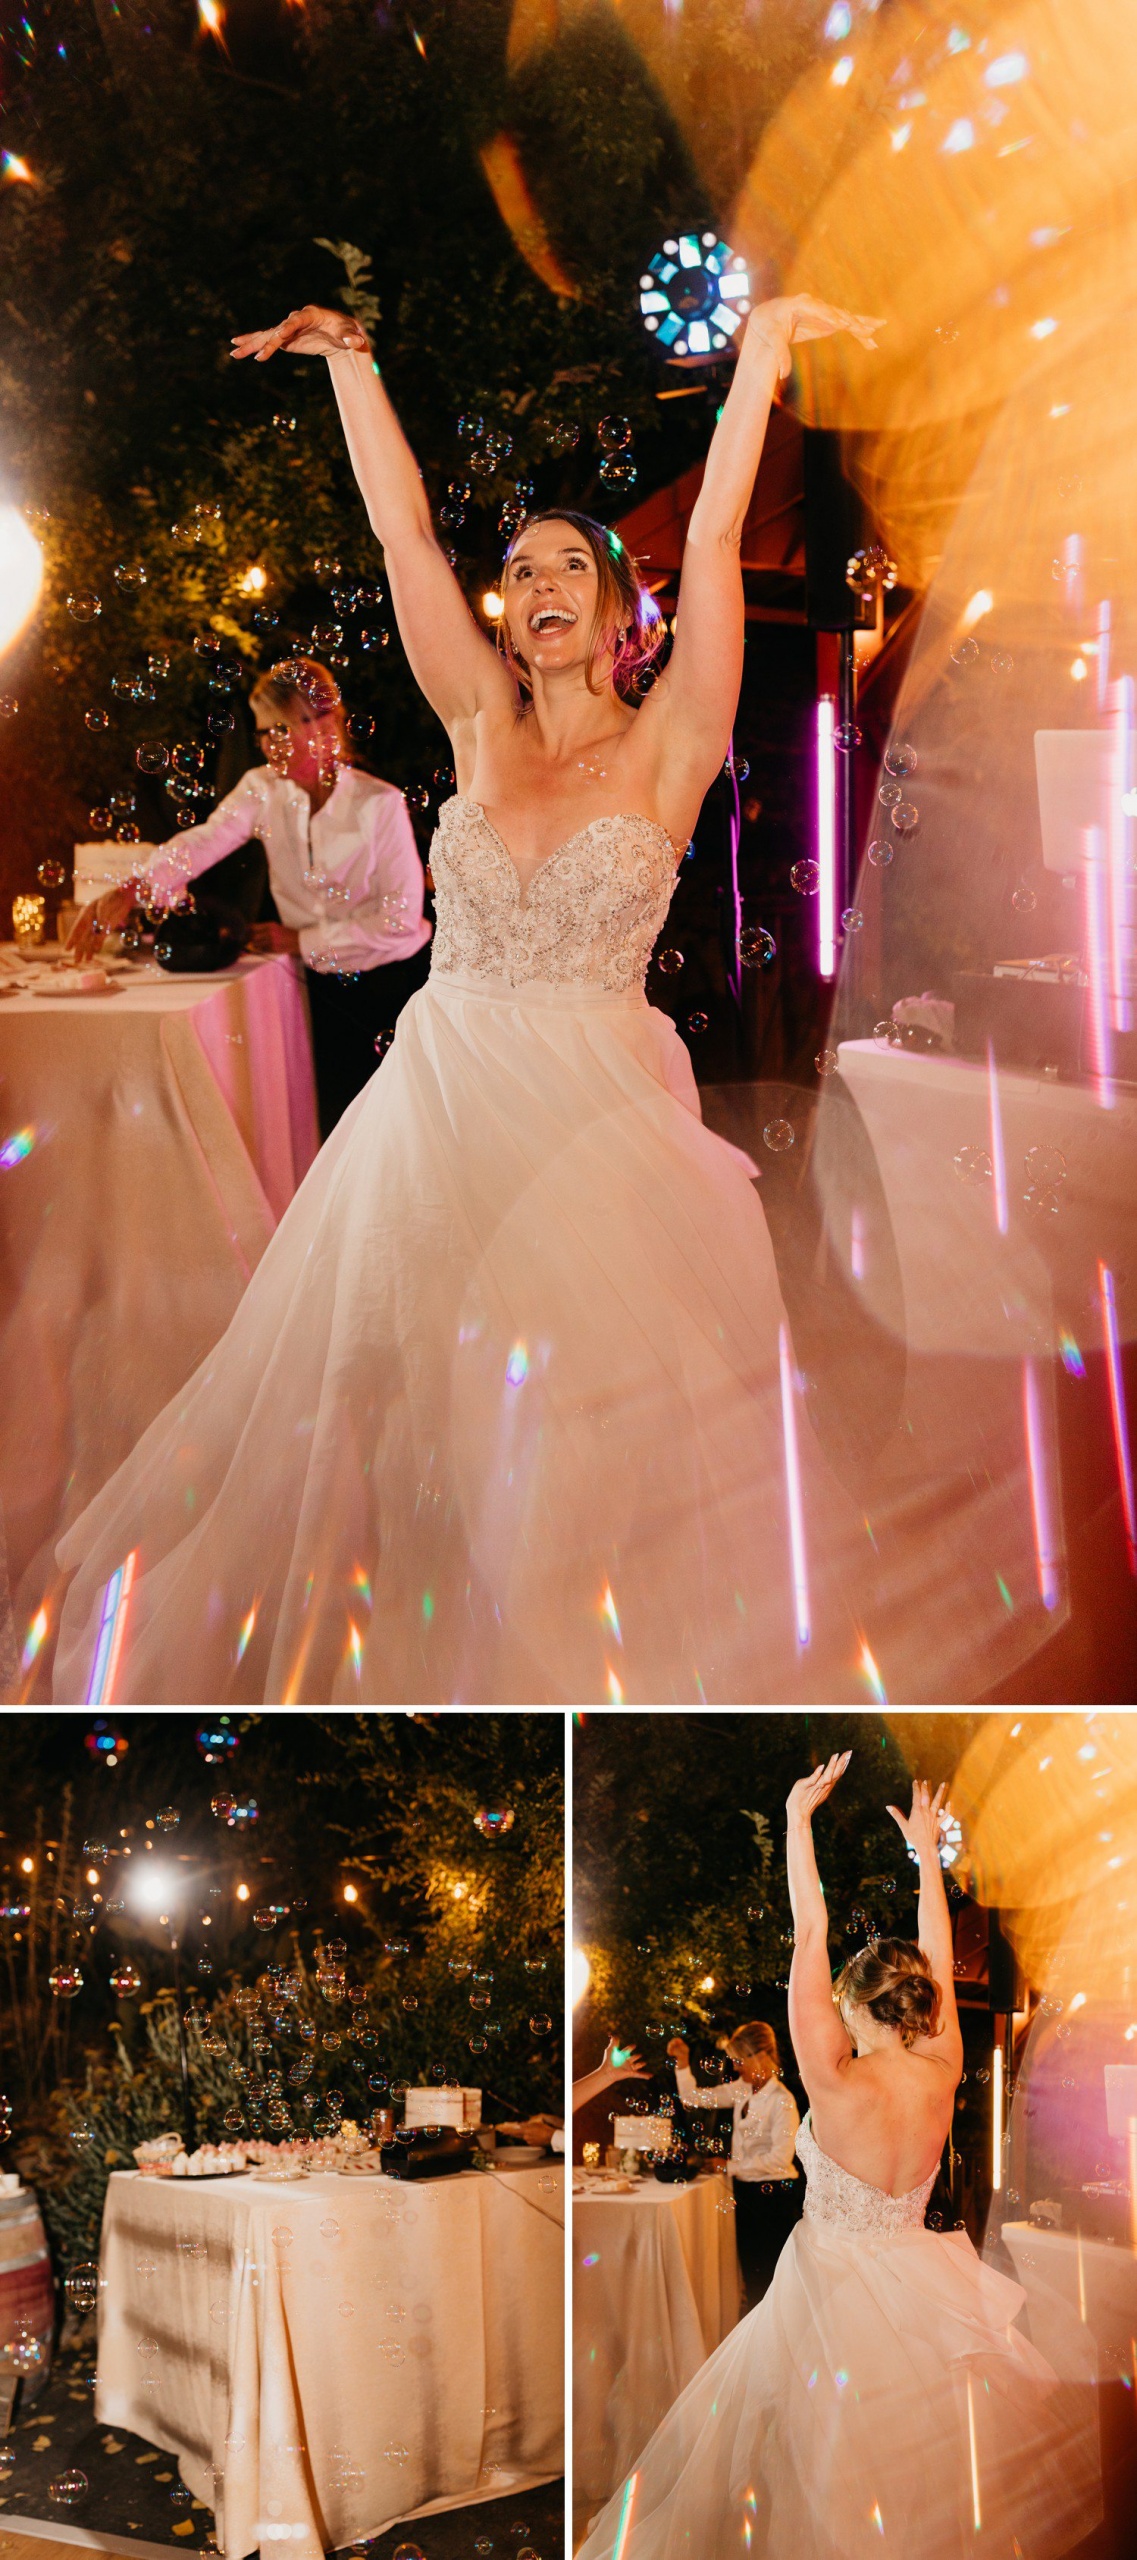 Bubble machine at wedding dancing photos